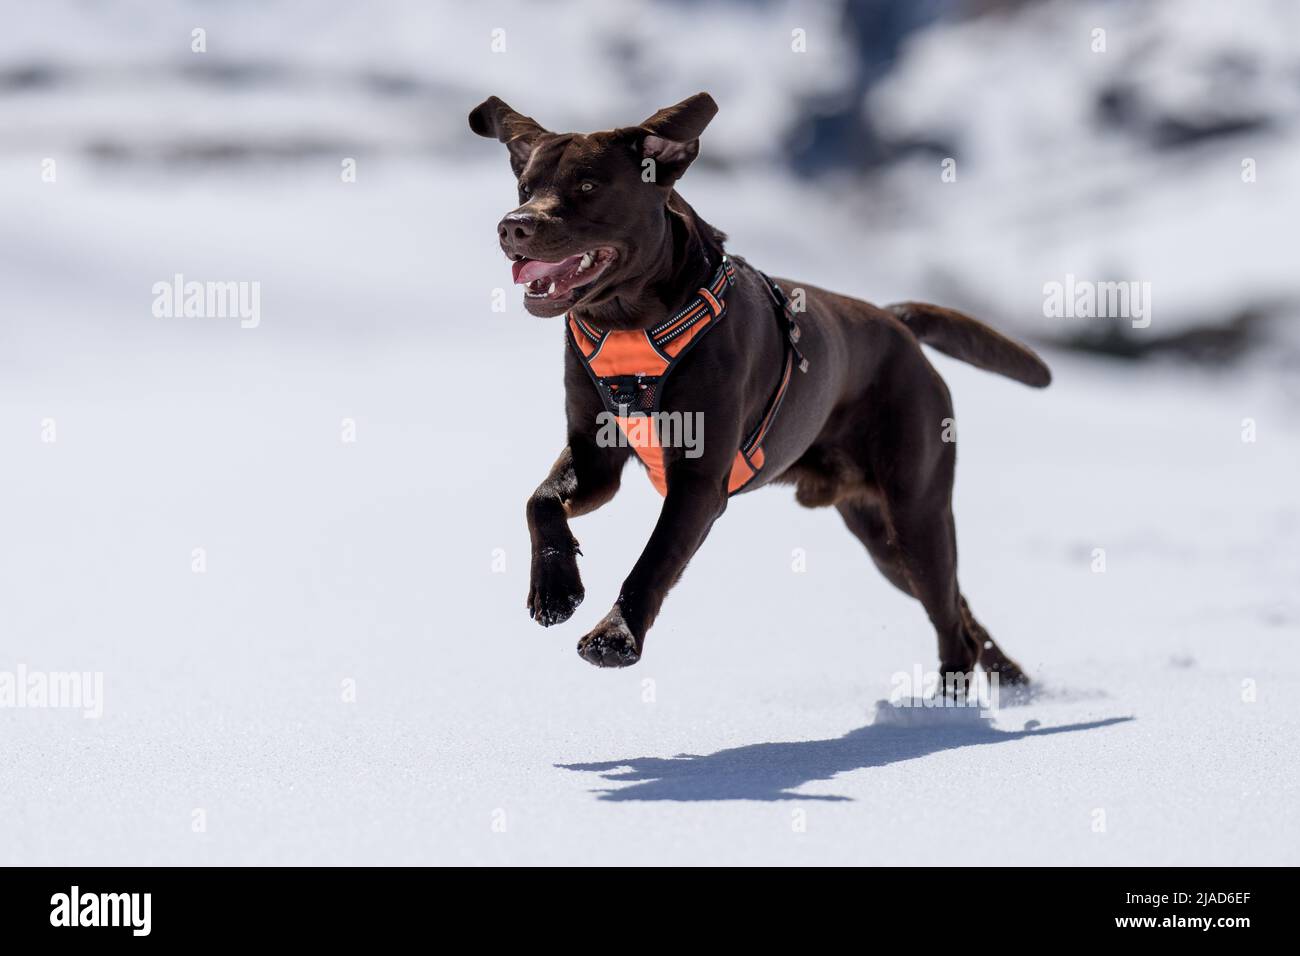 Chocolate brown Labrador running in the snow, Austria Stock Photo